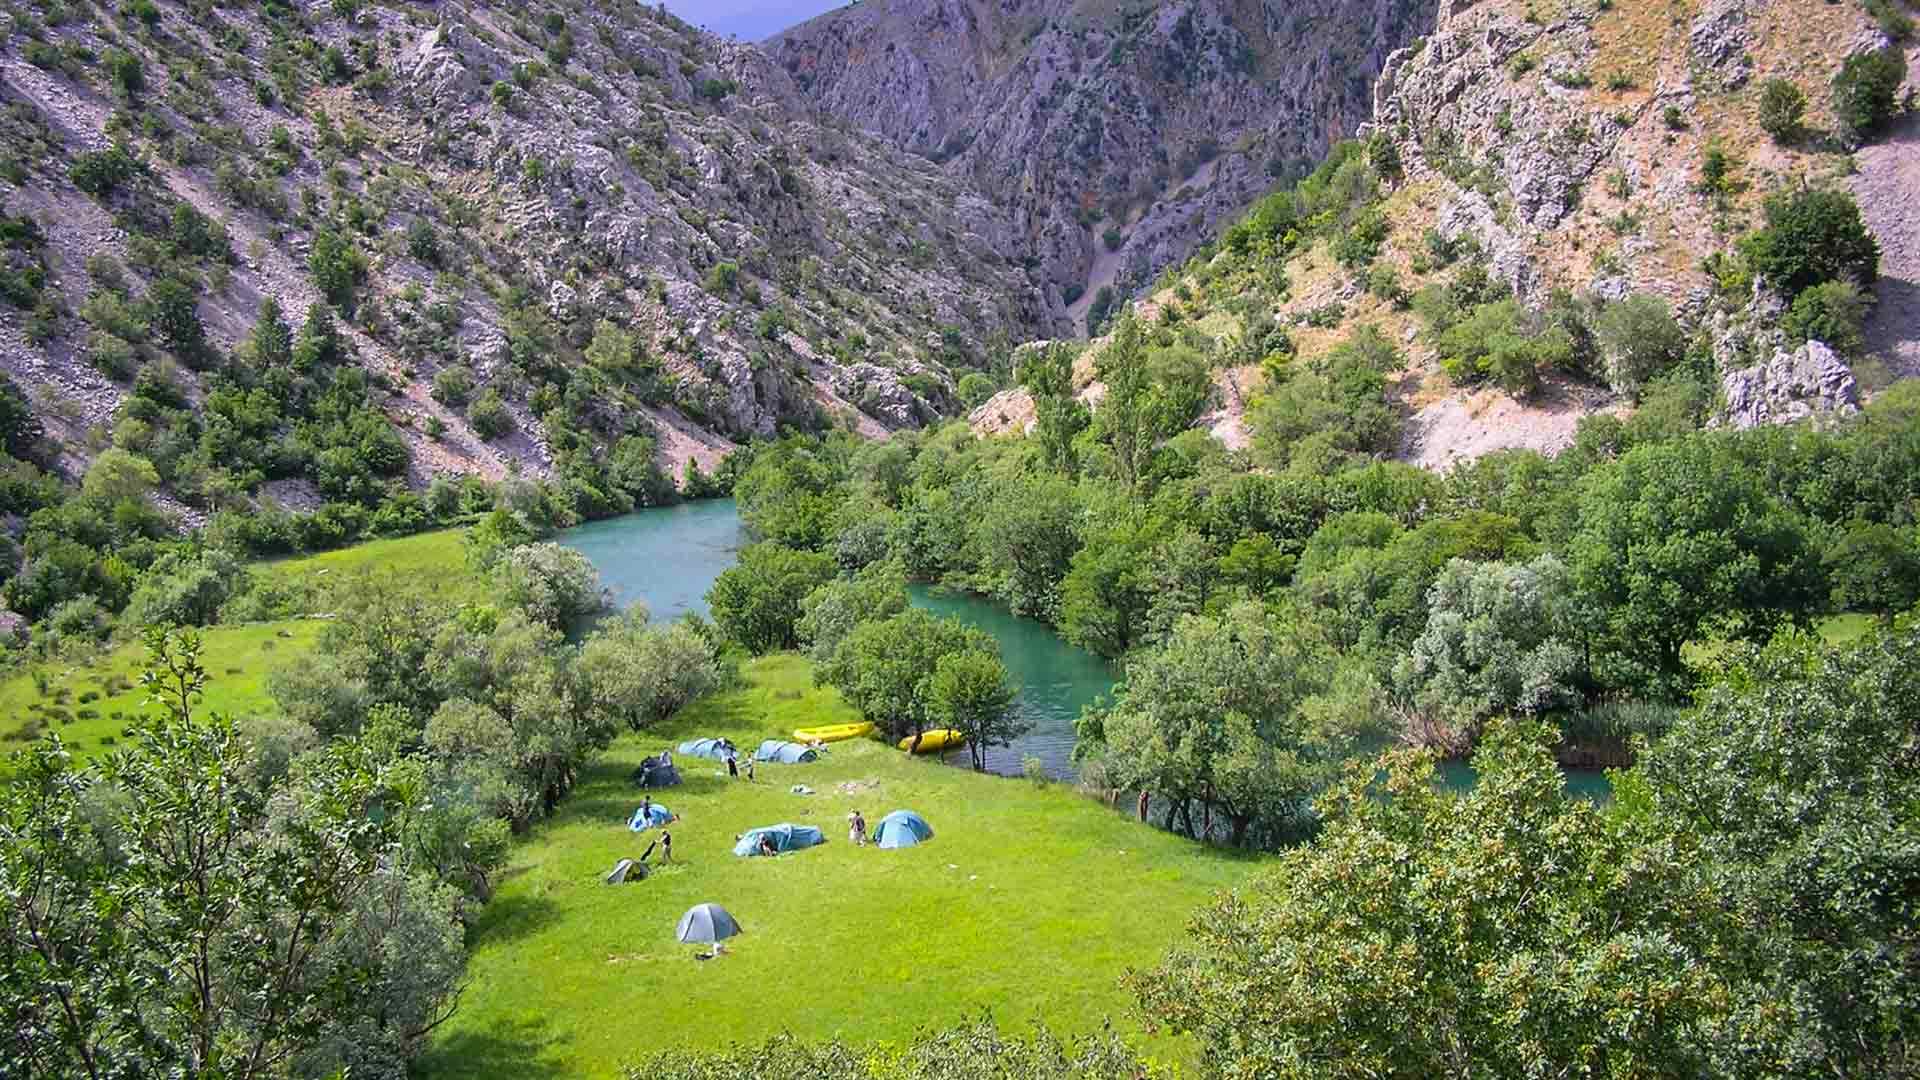 Camping in Croatia. Photo: Host/Raftrek